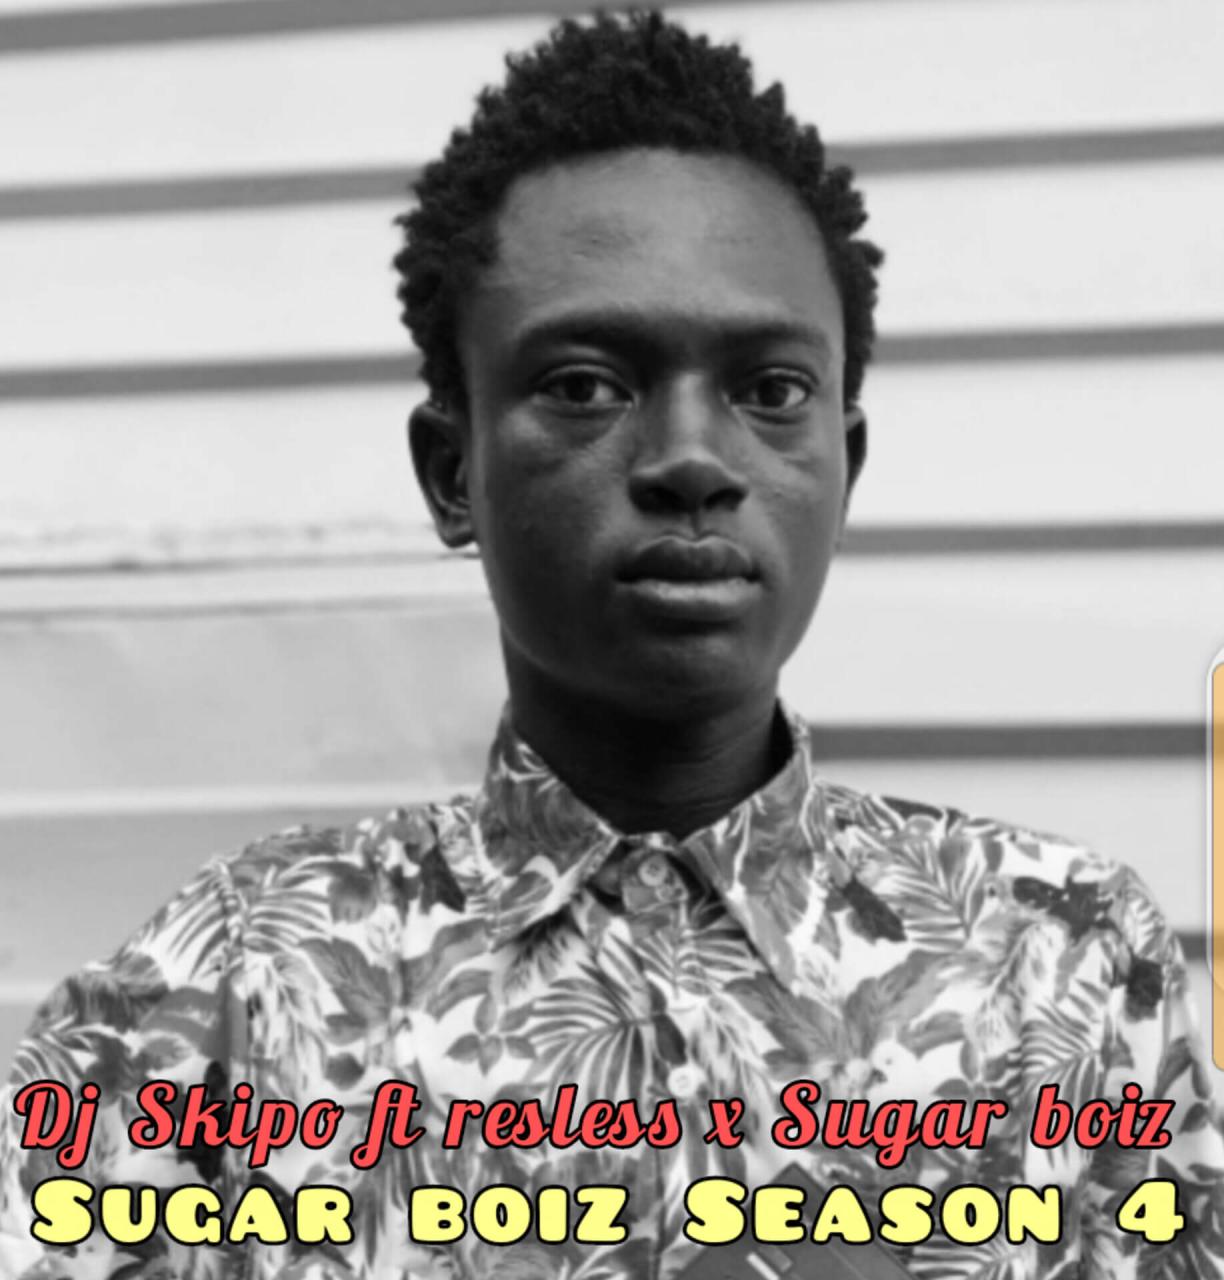 Music Dj Skipo Ft Restless X Sugar boiz - Sugar boiz Season 4